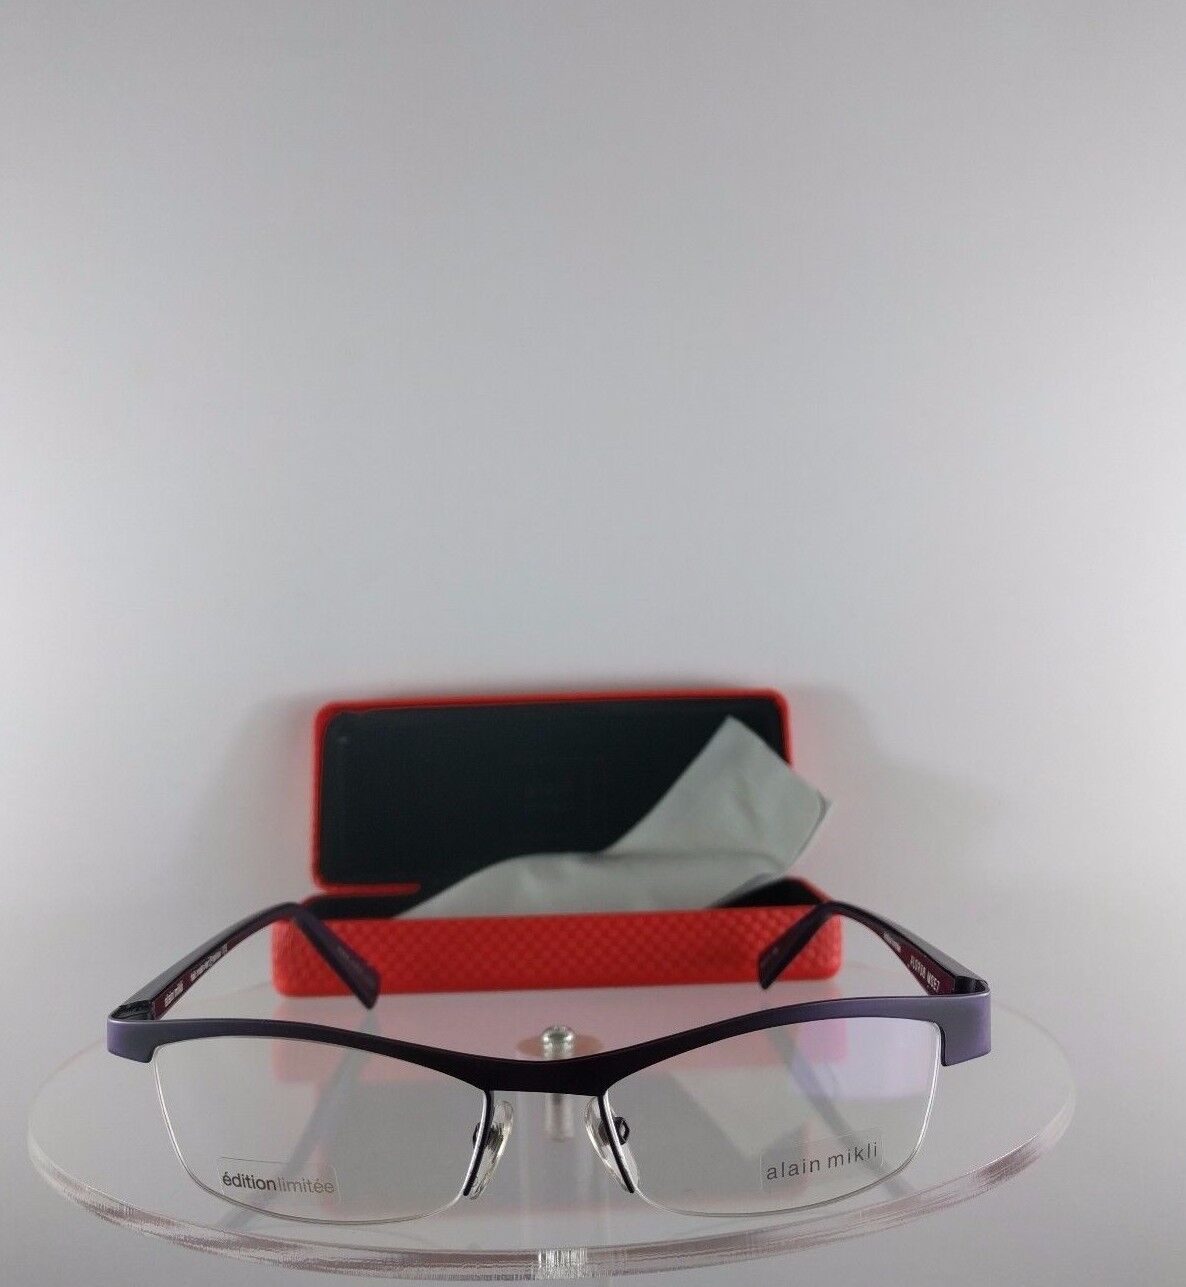 New Authentic Alain Mikli AL 0938 M0E7 Eyeglasses AL0938 Purple Frame